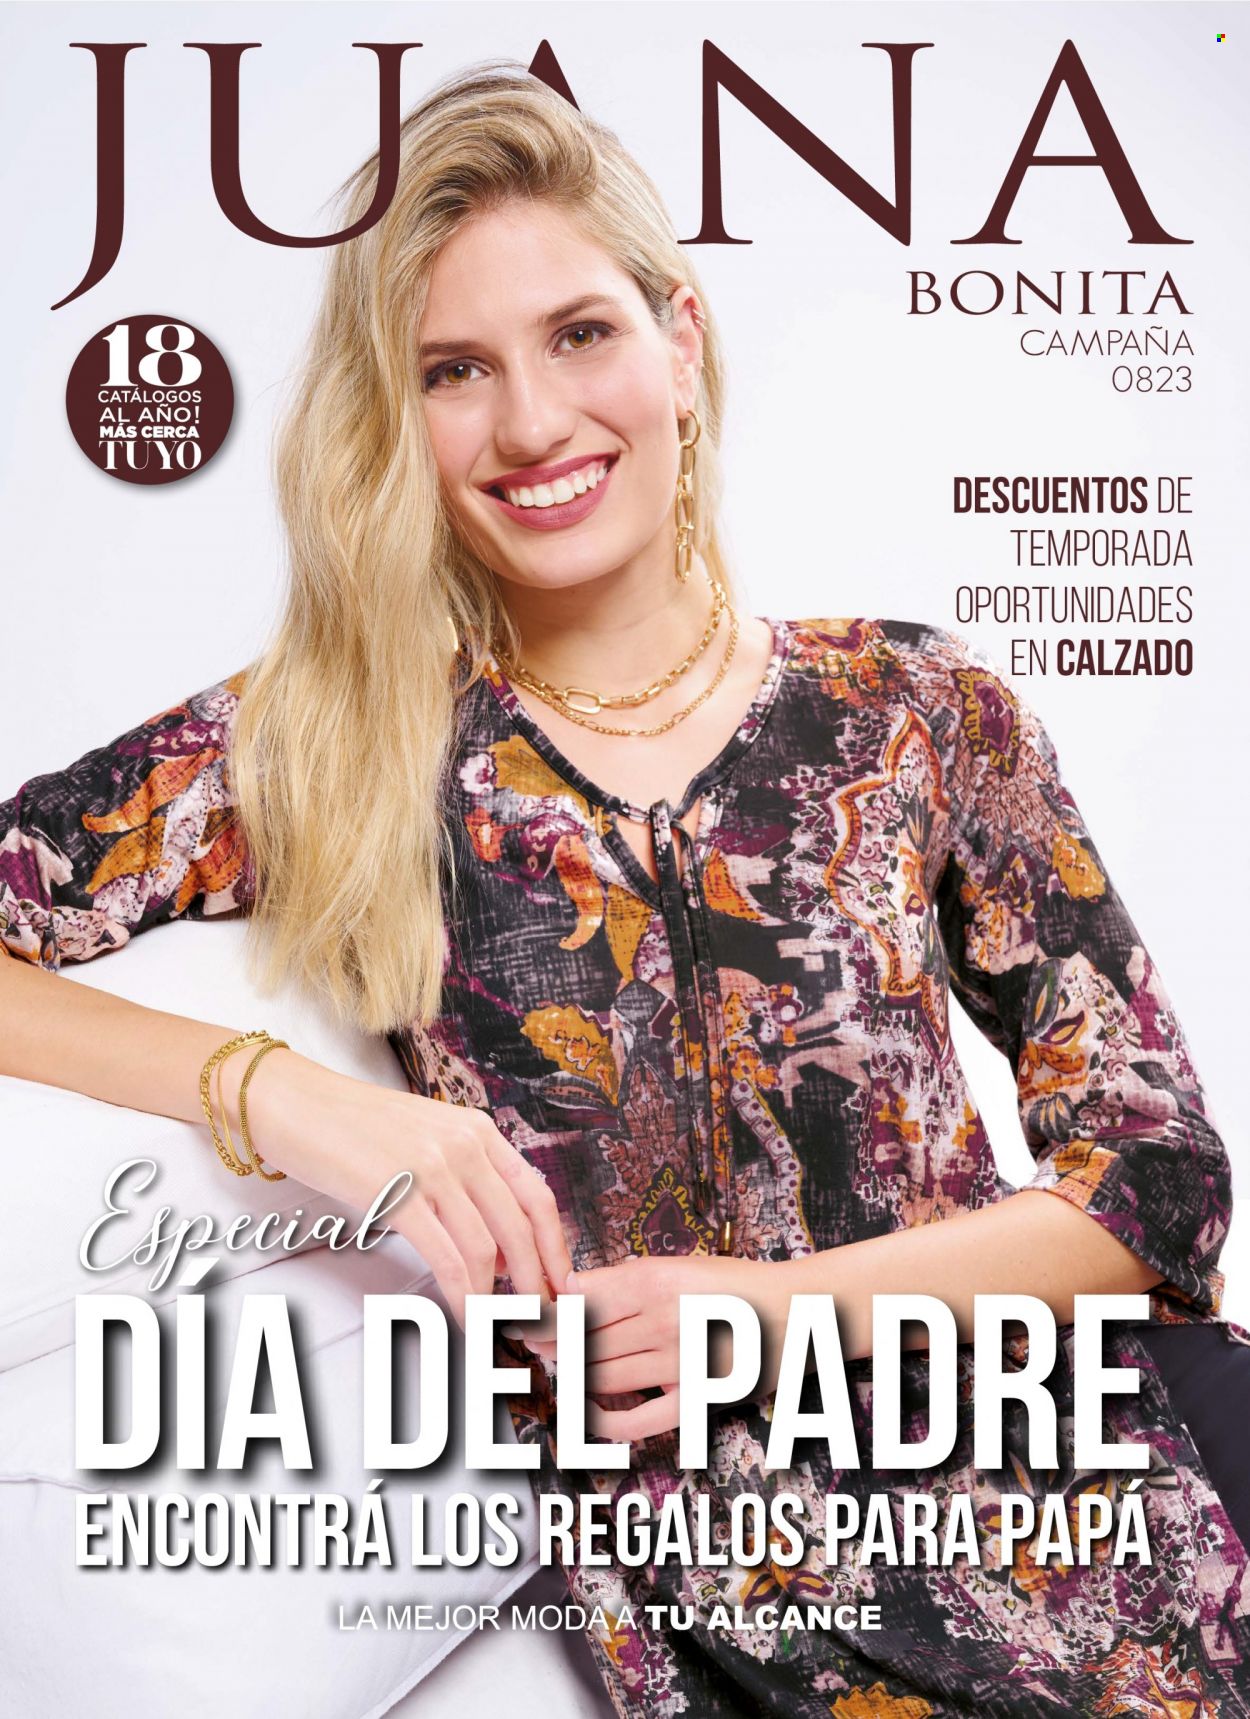 Catálogo Juana Bonita. Página 1.